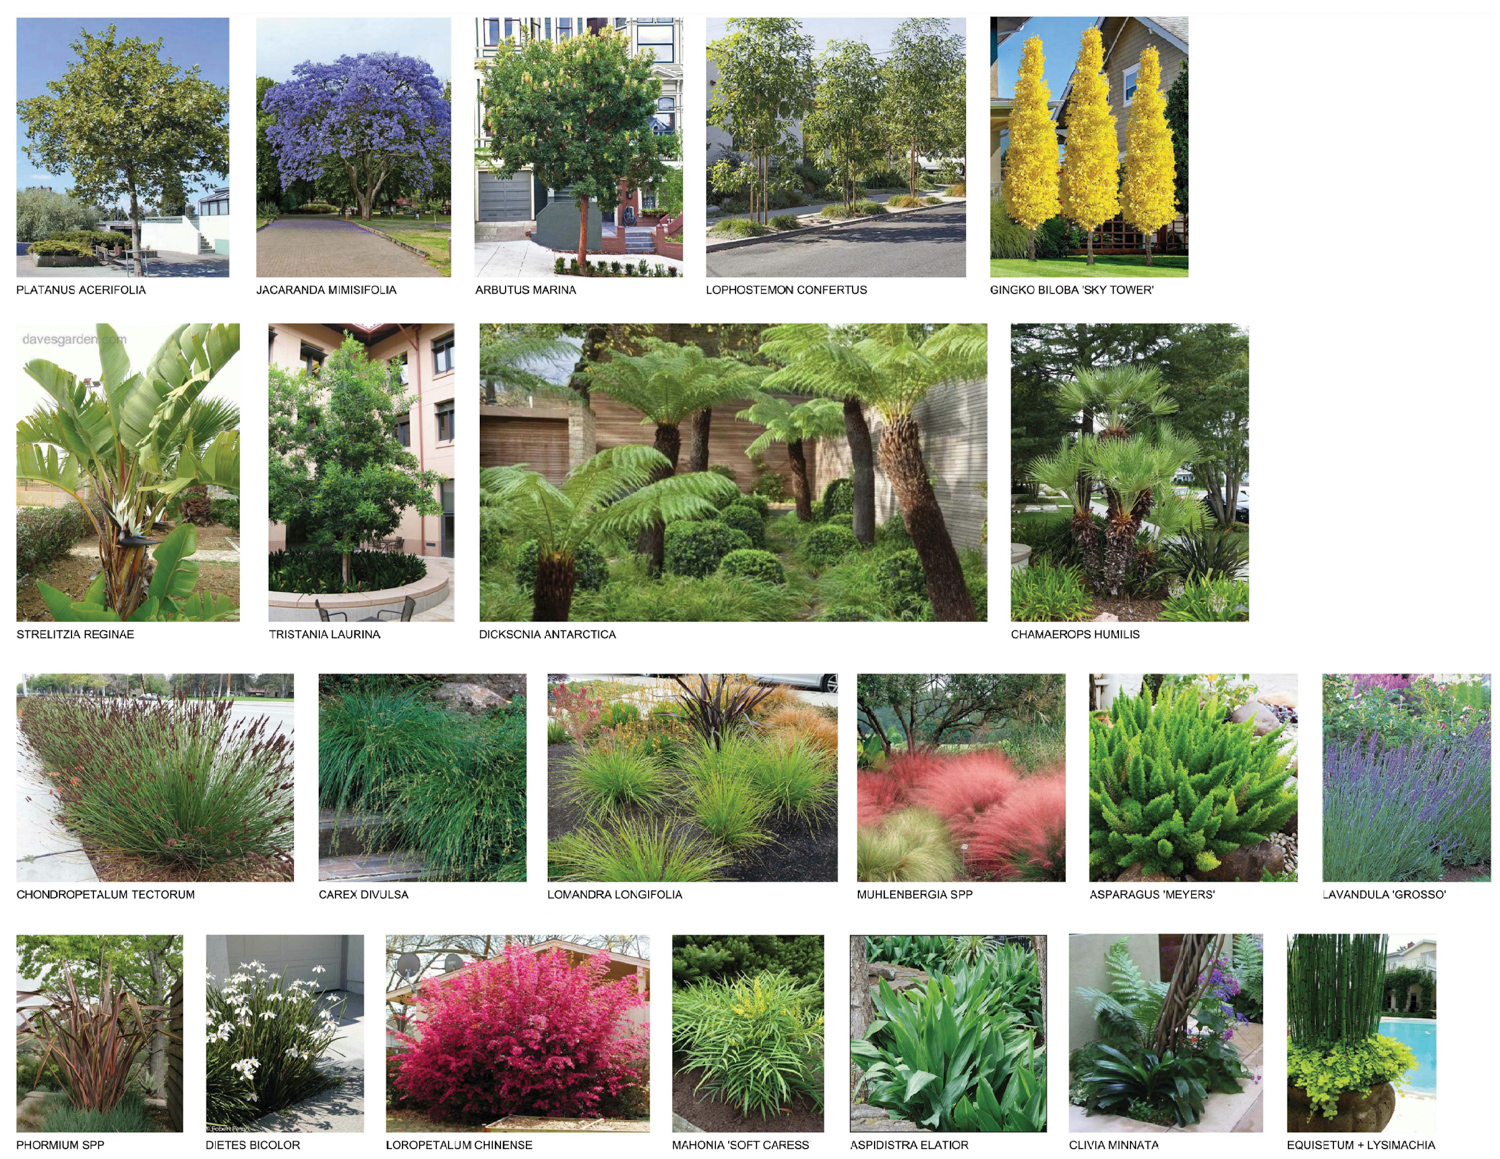 1188 East 14th Street greenery composition, via The Guzzardo Partnership